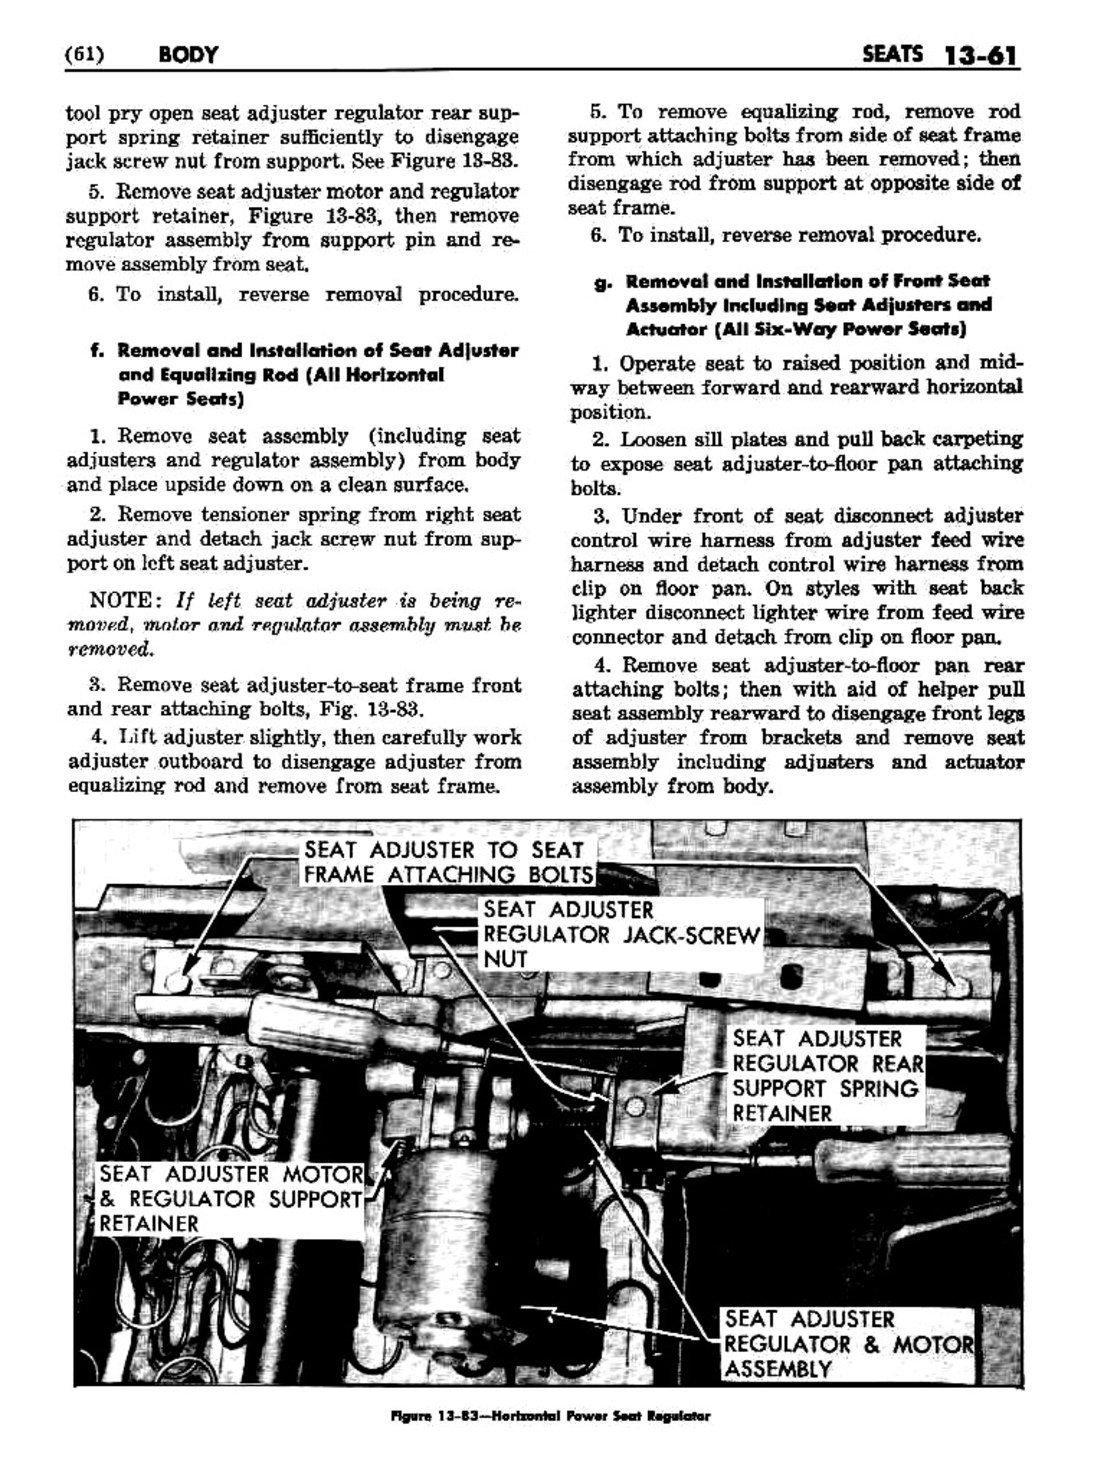 n_1957 Buick Body Service Manual-063-063.jpg